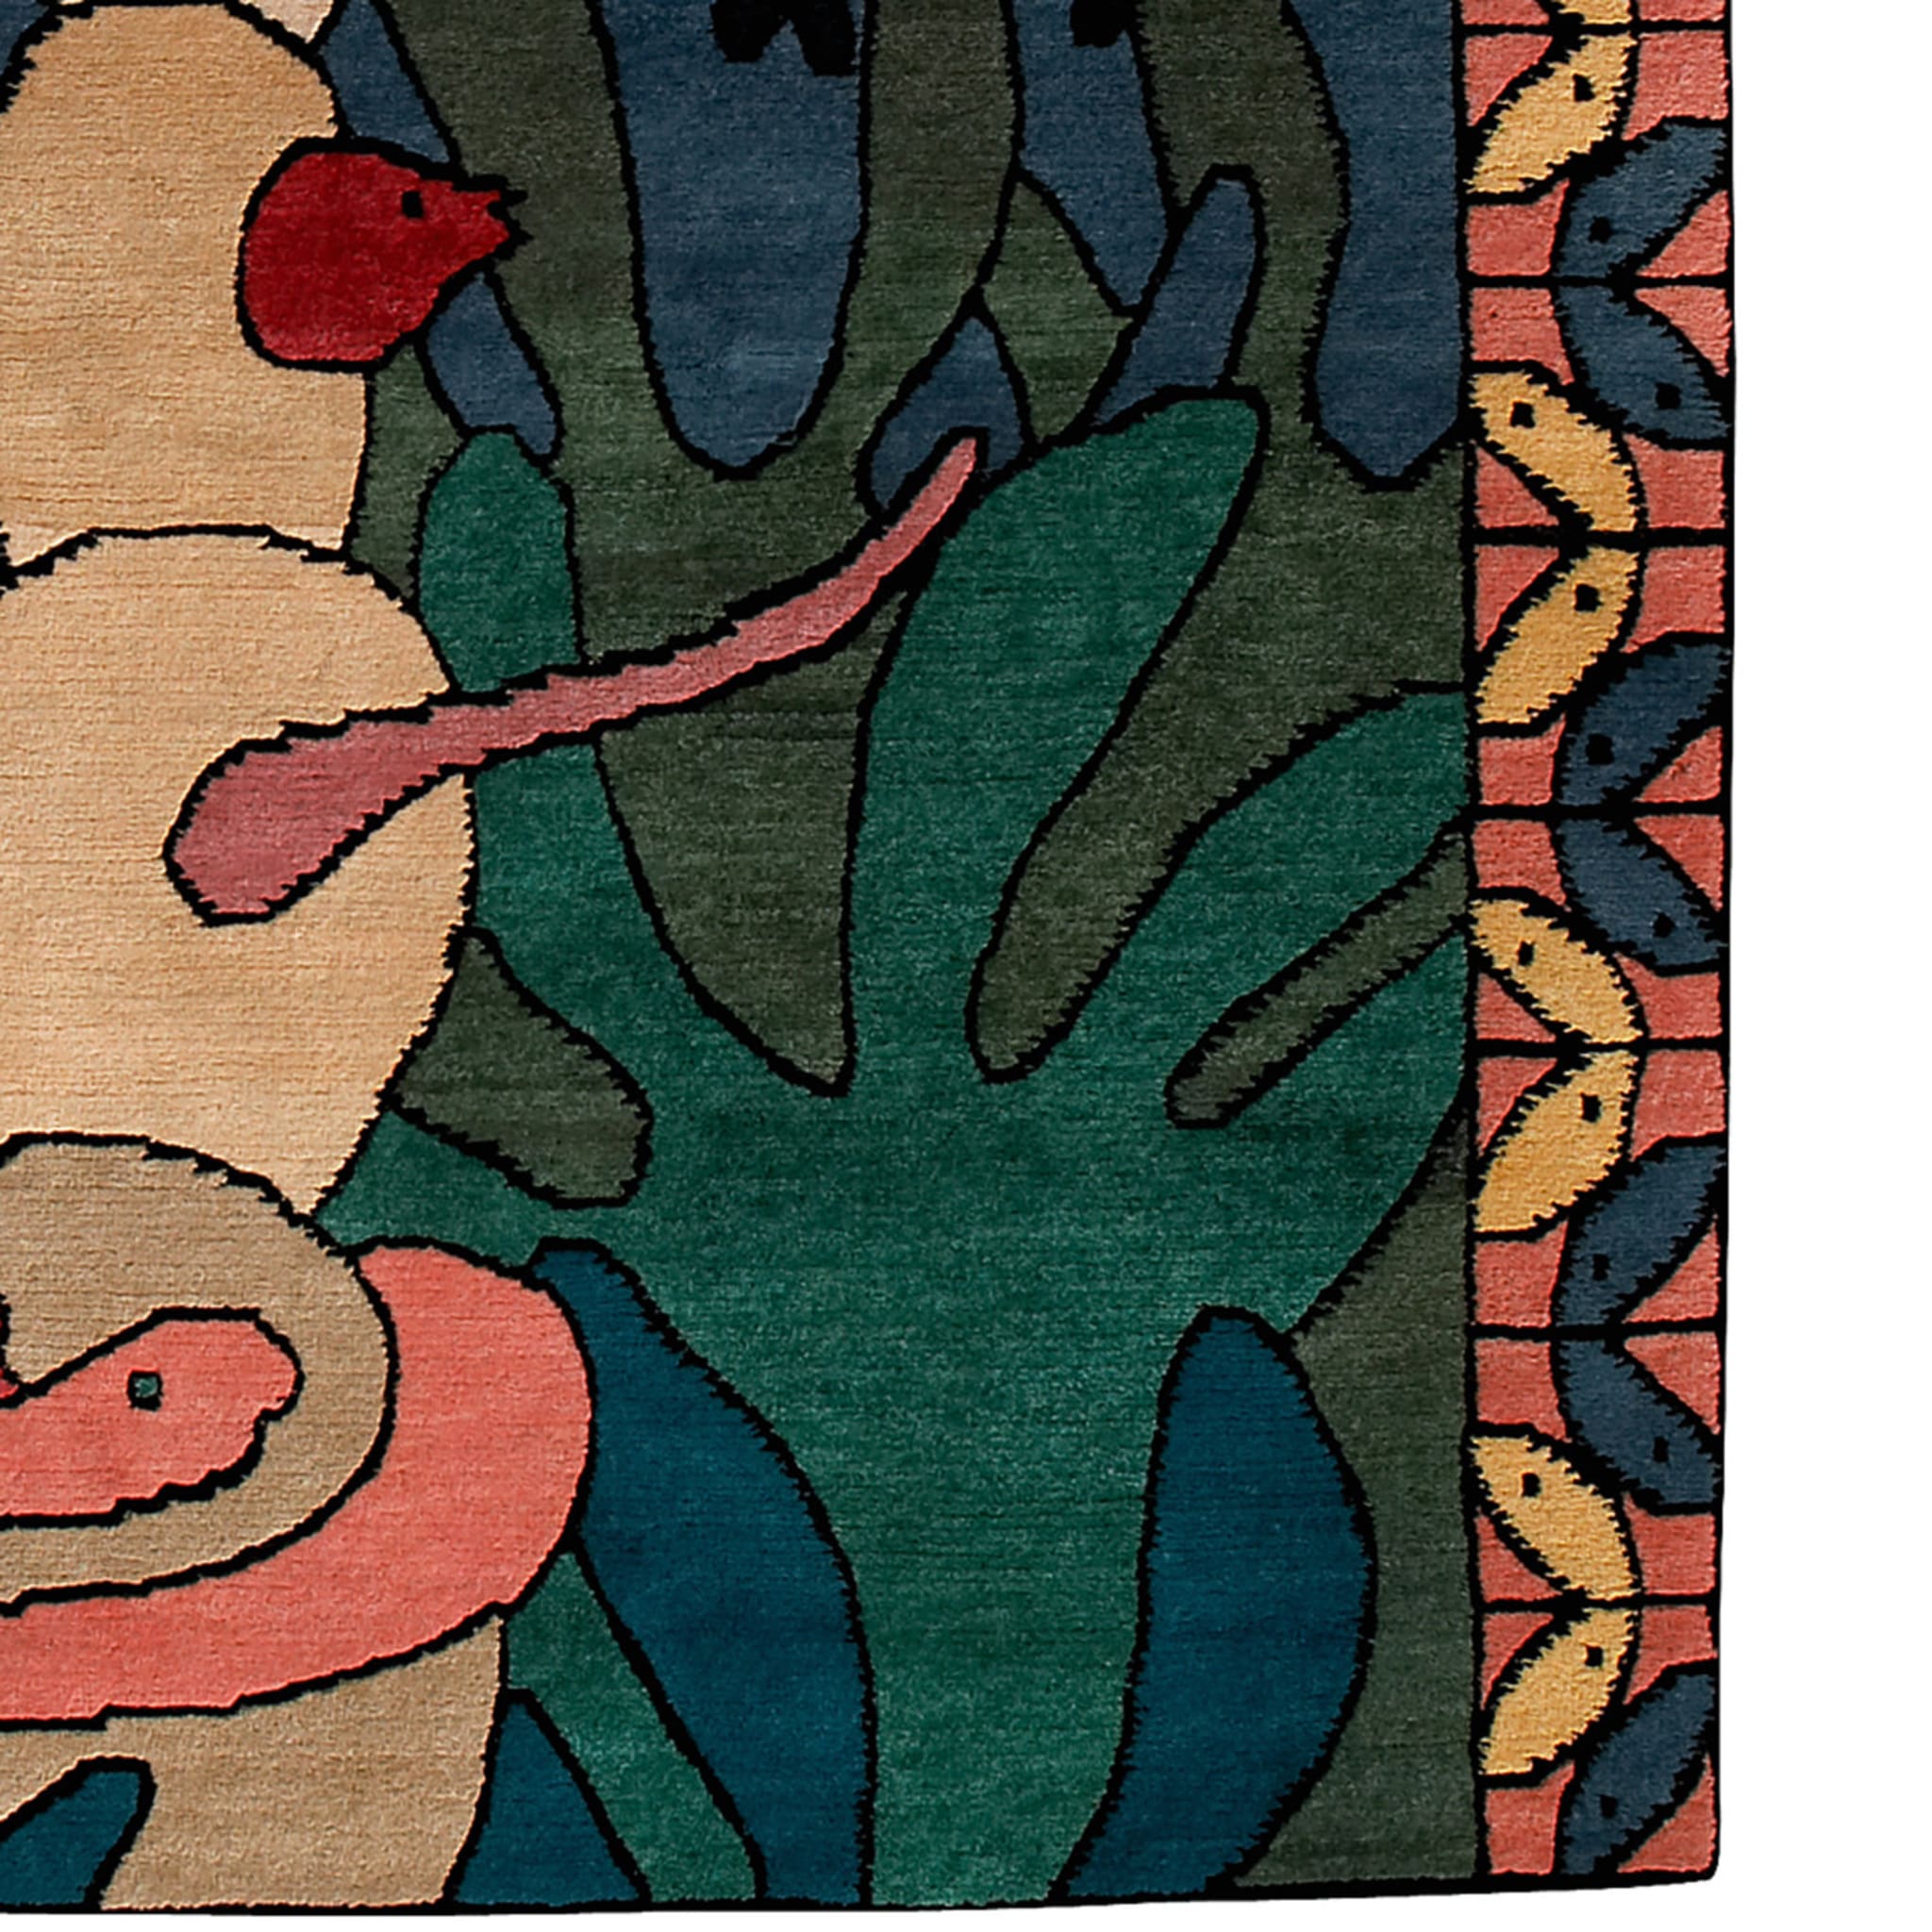 MCH4 Tapestry by M. C. Hamel - Post Design - Alternative view 2